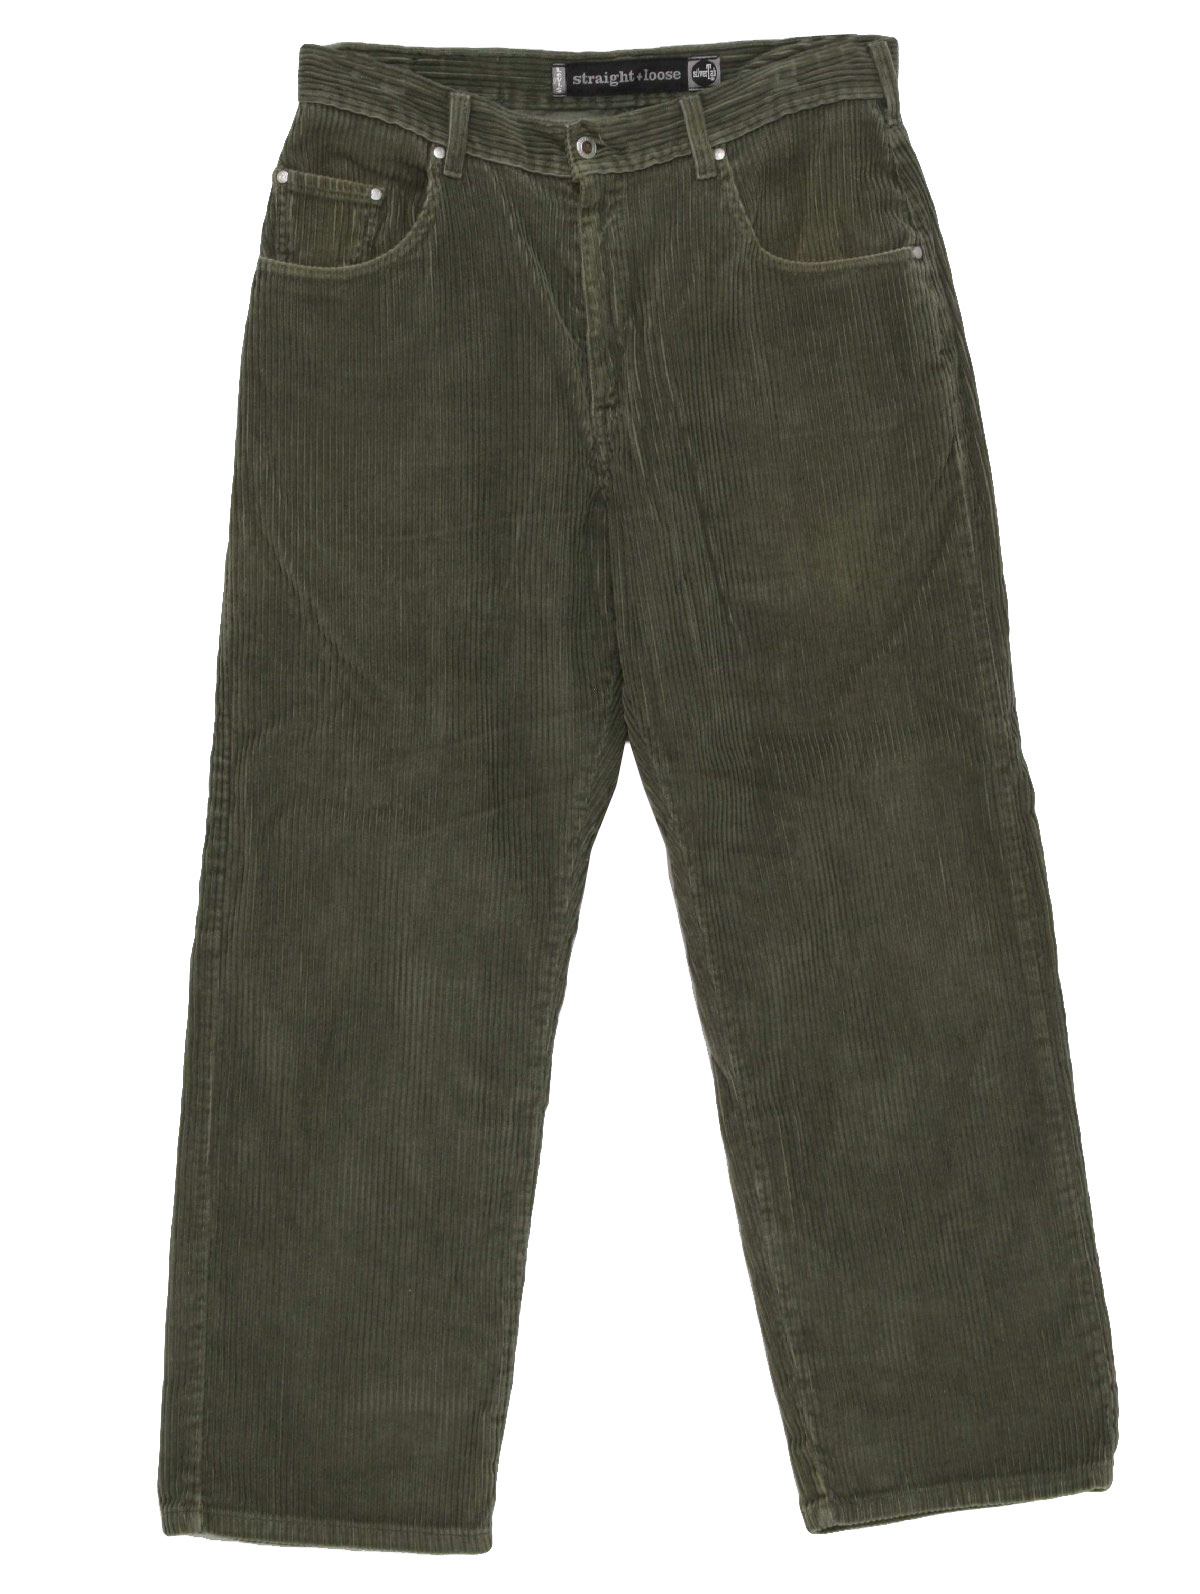 Retro 1990s Pants: 90s -Levis Silver Tab- Mens olive drab cotton ...